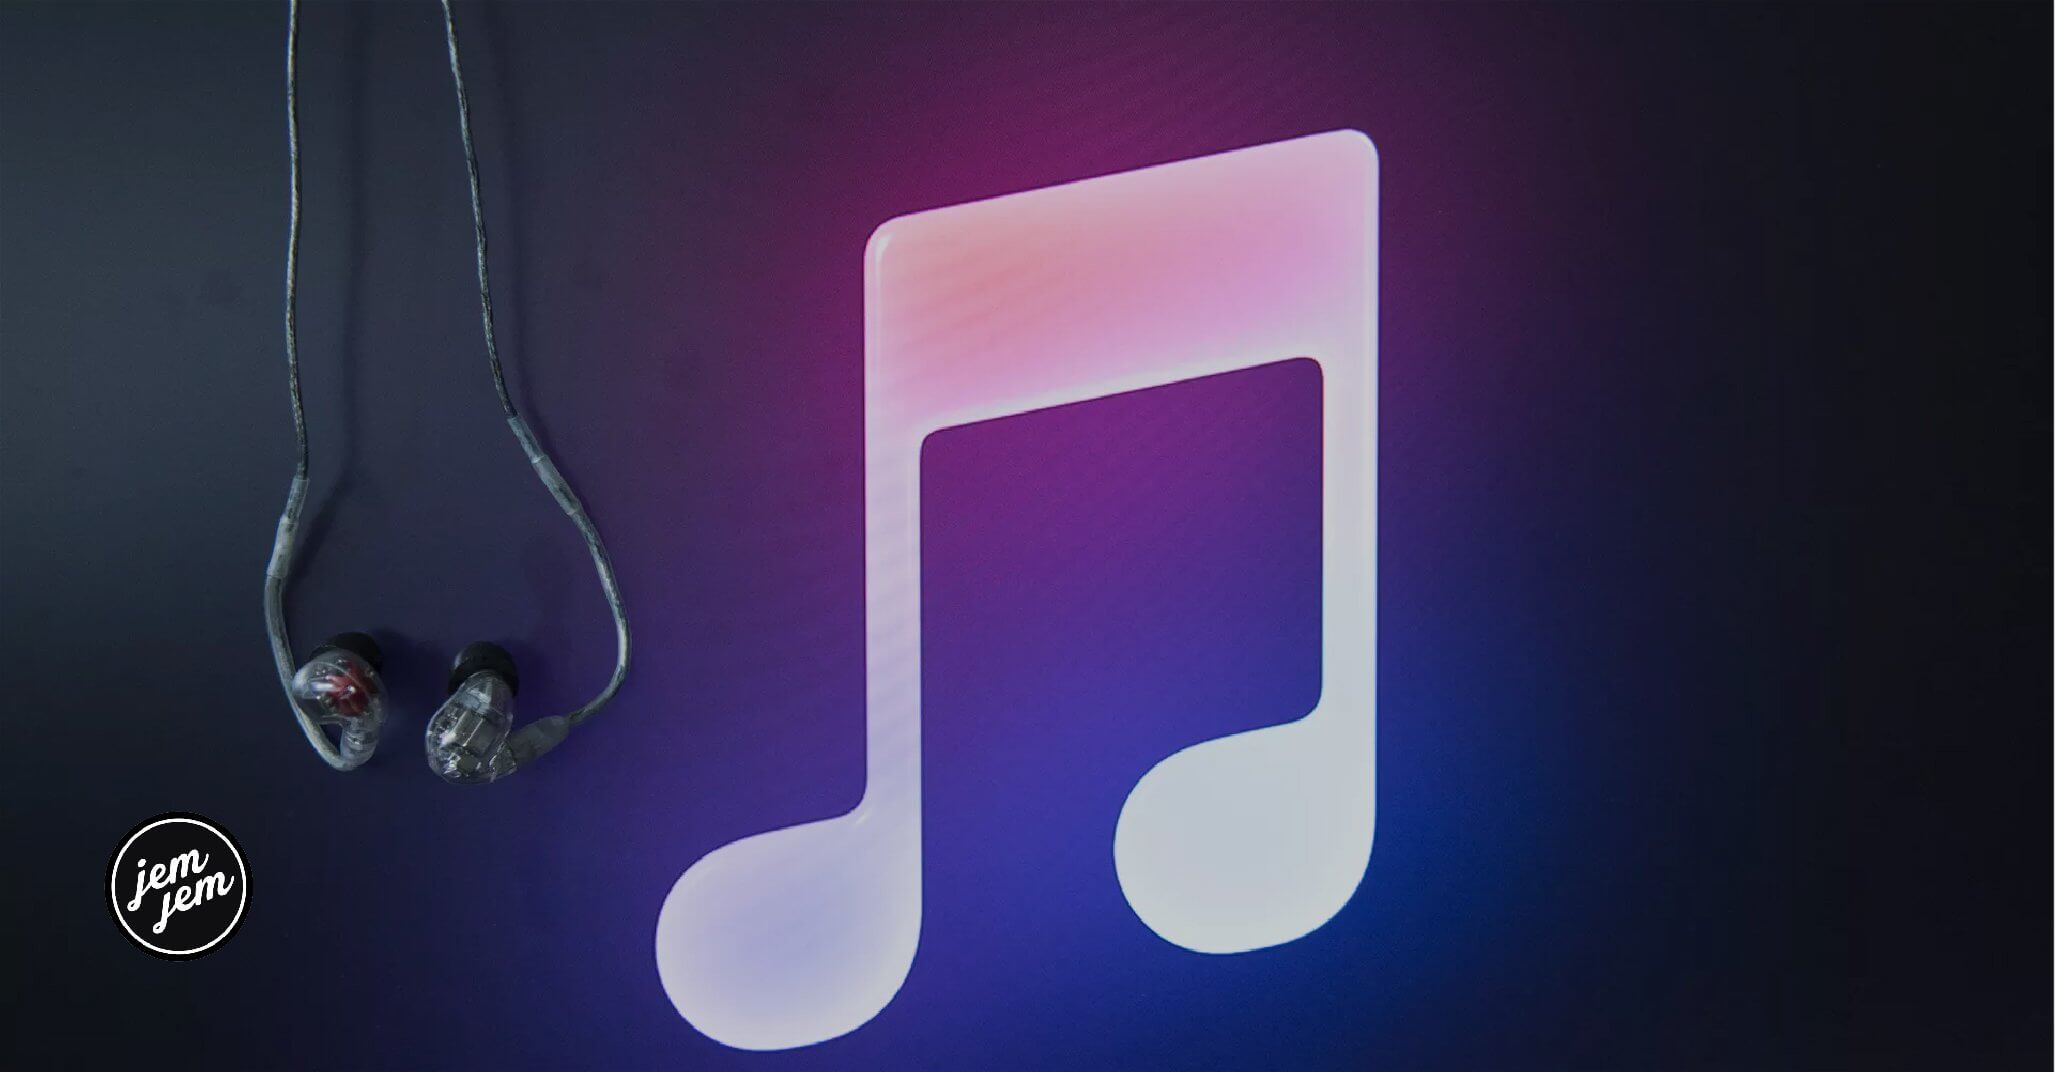 How to set an iPhone sleep timer using Apple Music